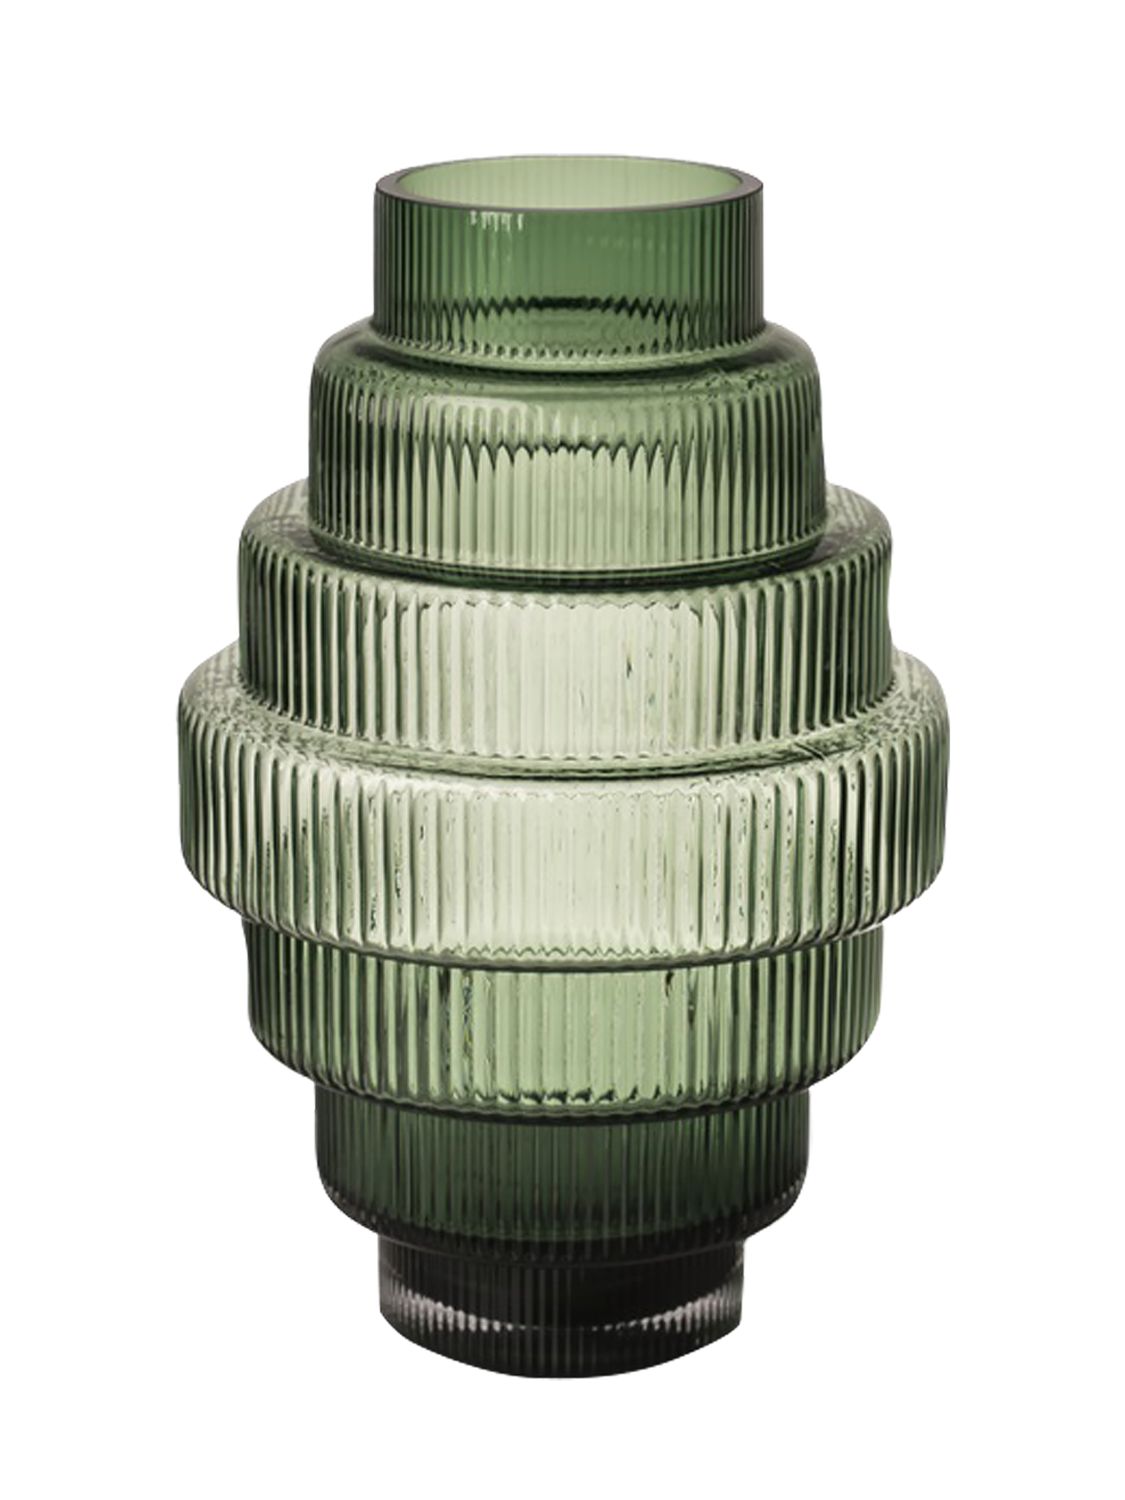 Polspotten Small Steps Vase In Green